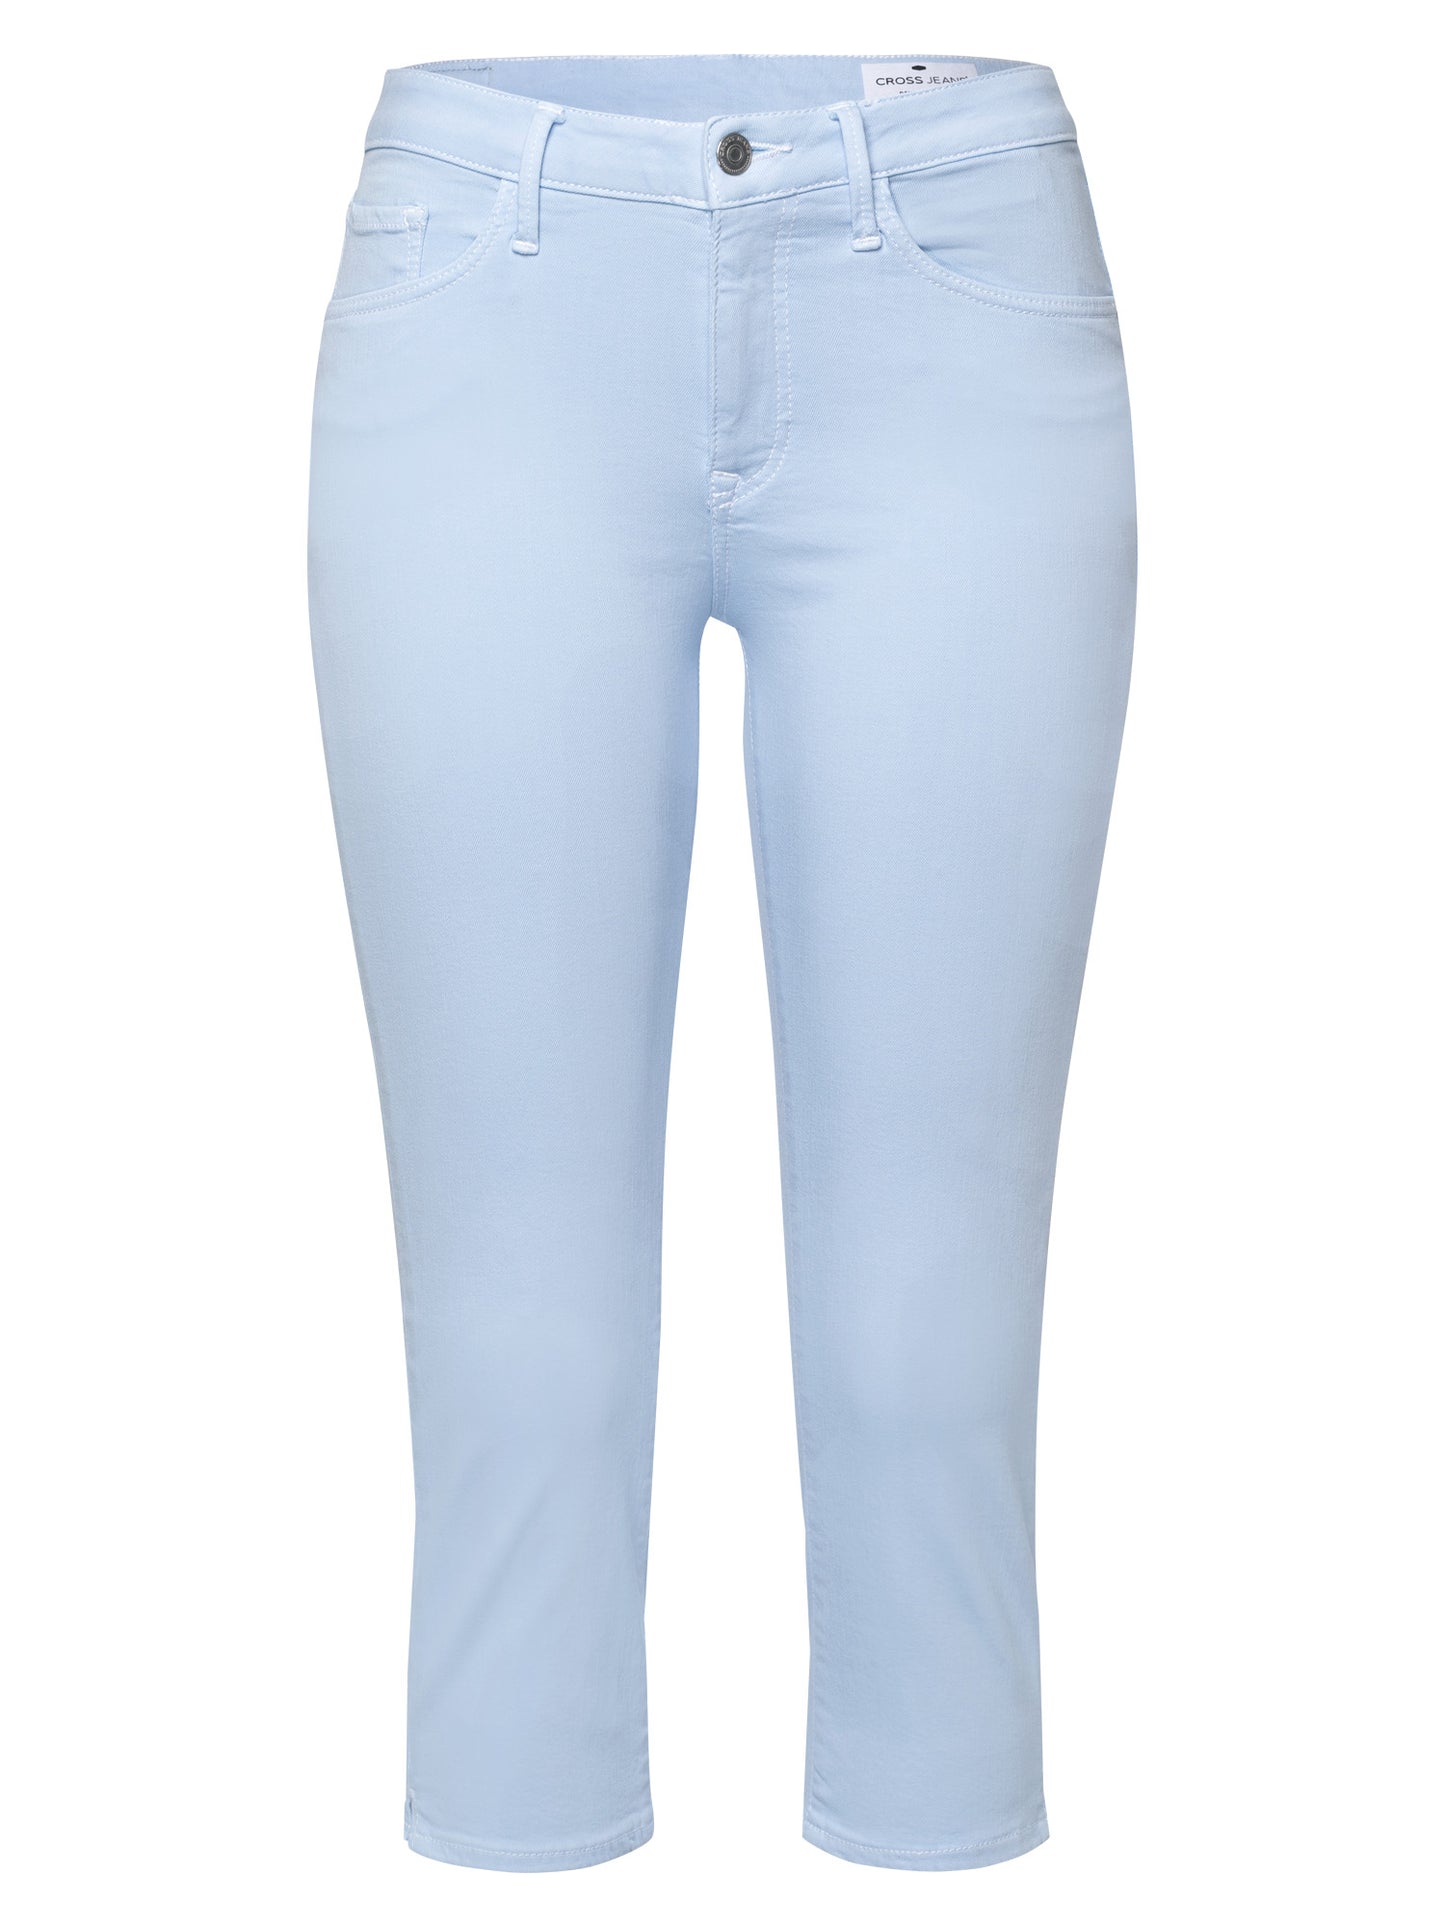 Amber Damen Jeans Capri hell blau